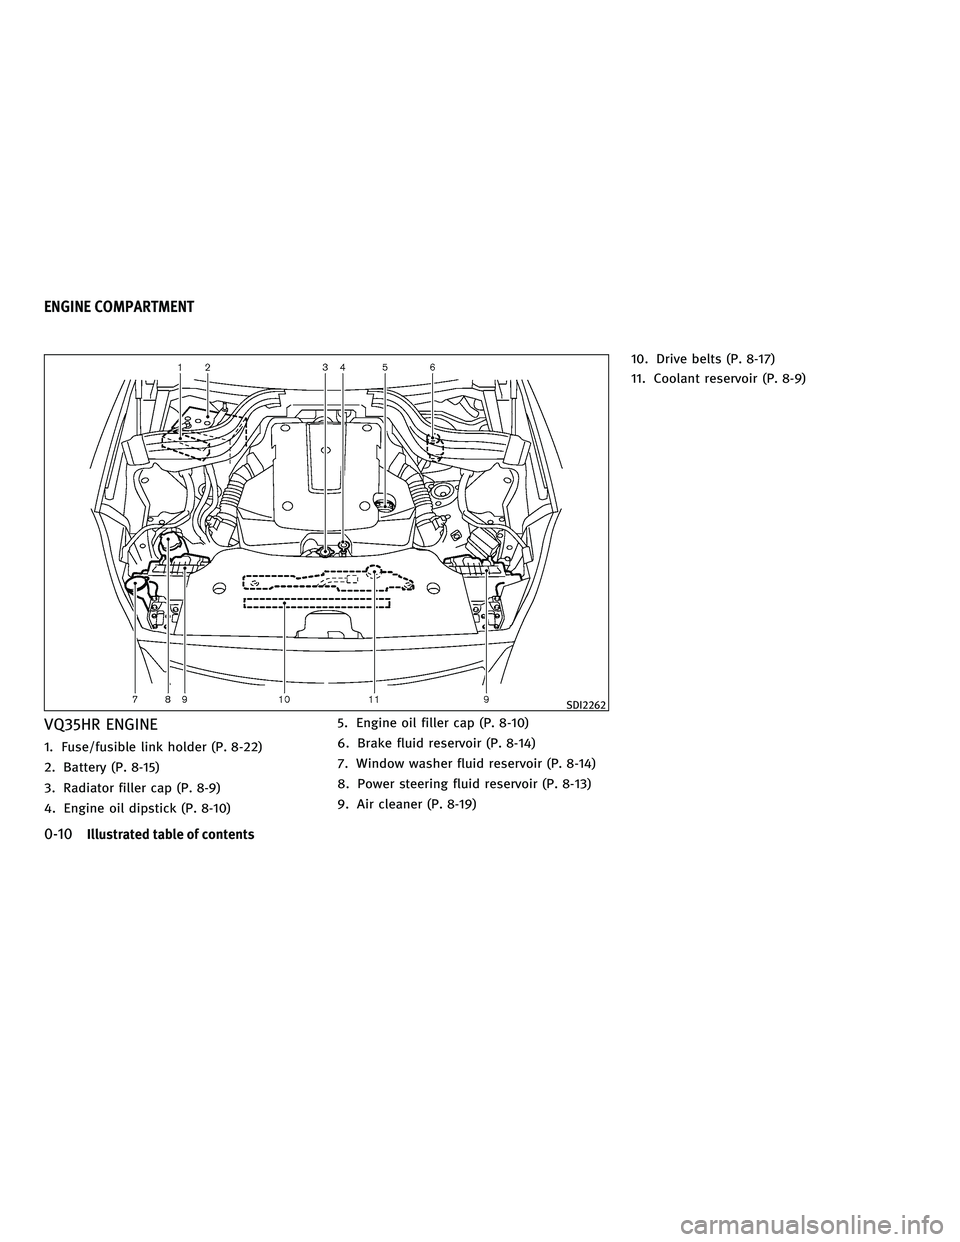 INFINITI FX 2010  Owners Manual VQ35HR ENGINE
1. Fuse/fusible link holder (P. 8-22)
2. Battery (P. 8-15)
3. Radiator filler cap (P. 8-9)
4. Engine oil dipstick (P. 8-10)5. Engine oil filler cap (P. 8-10)
6. Brake fluid reservoir (P.